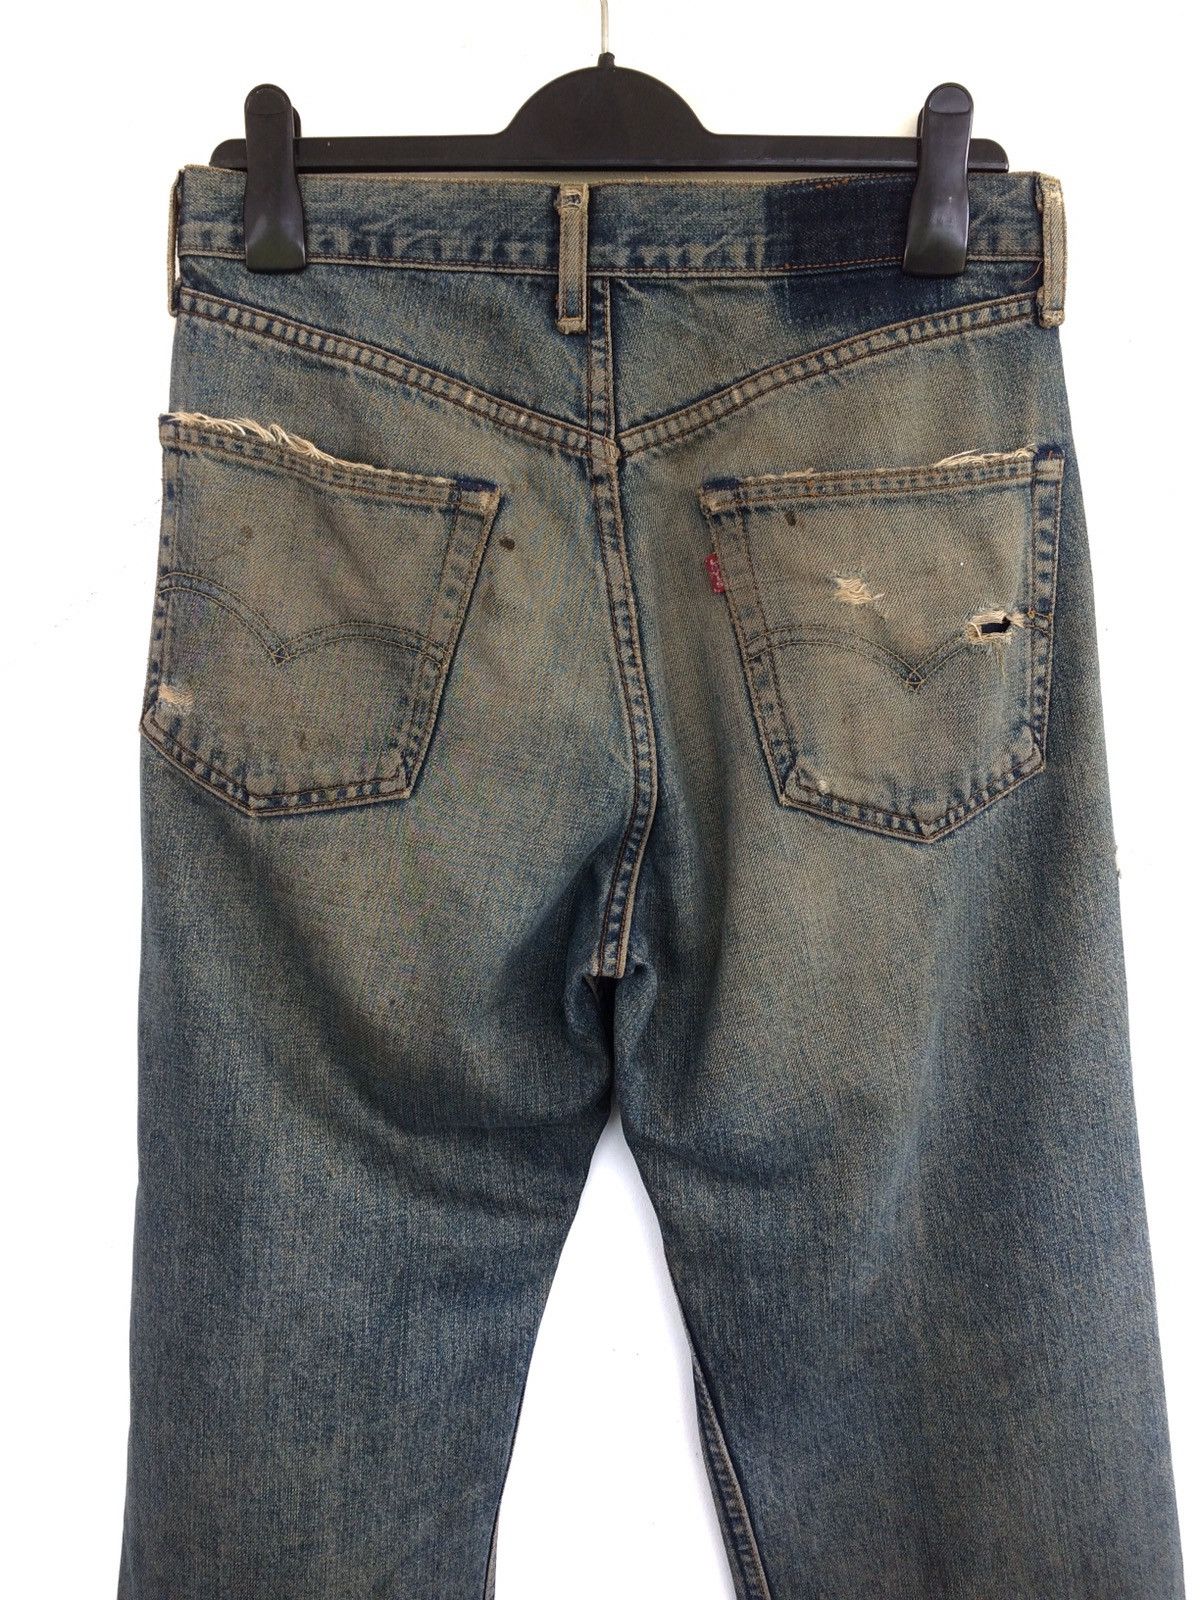 Vintage Levis Distressed Kurt Cobain Fashion Style Denim Pant Size US 31 - 7 Thumbnail